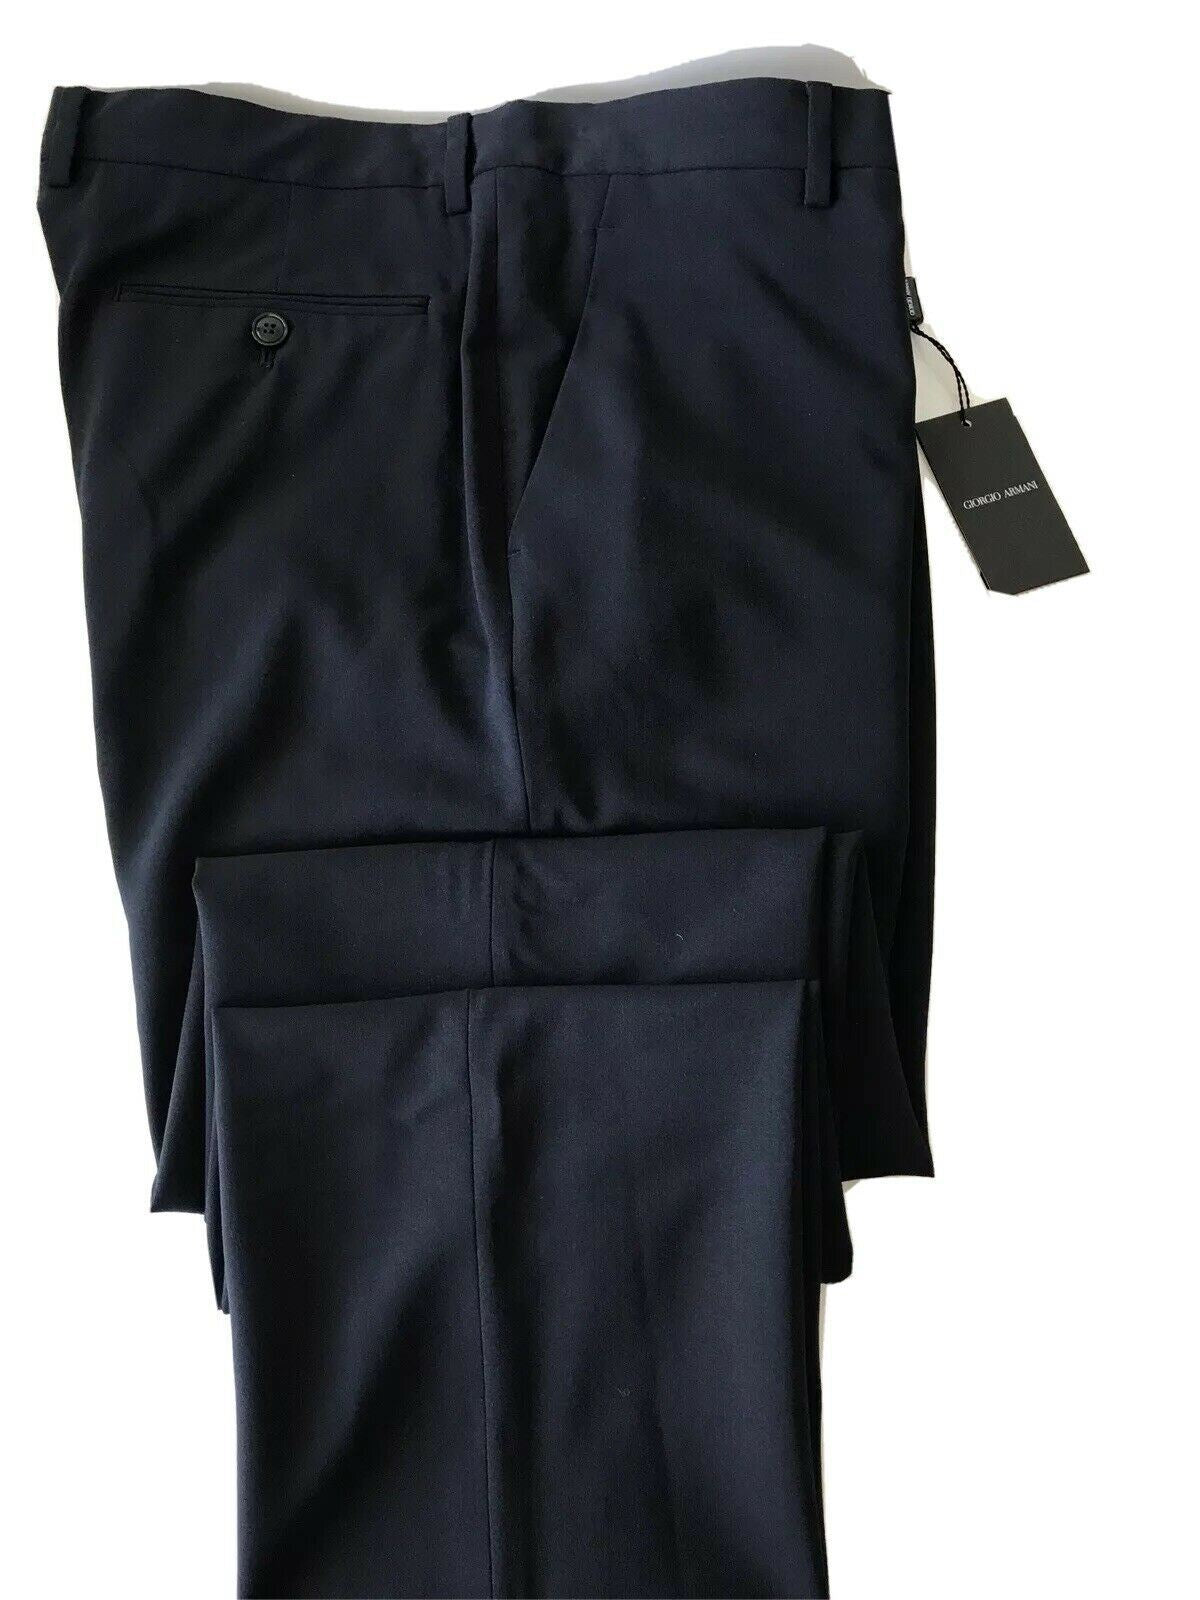 NWT $975 Giorgio Armani Mens Wool Dress Pants Size 38 US VSP040 - minor cut